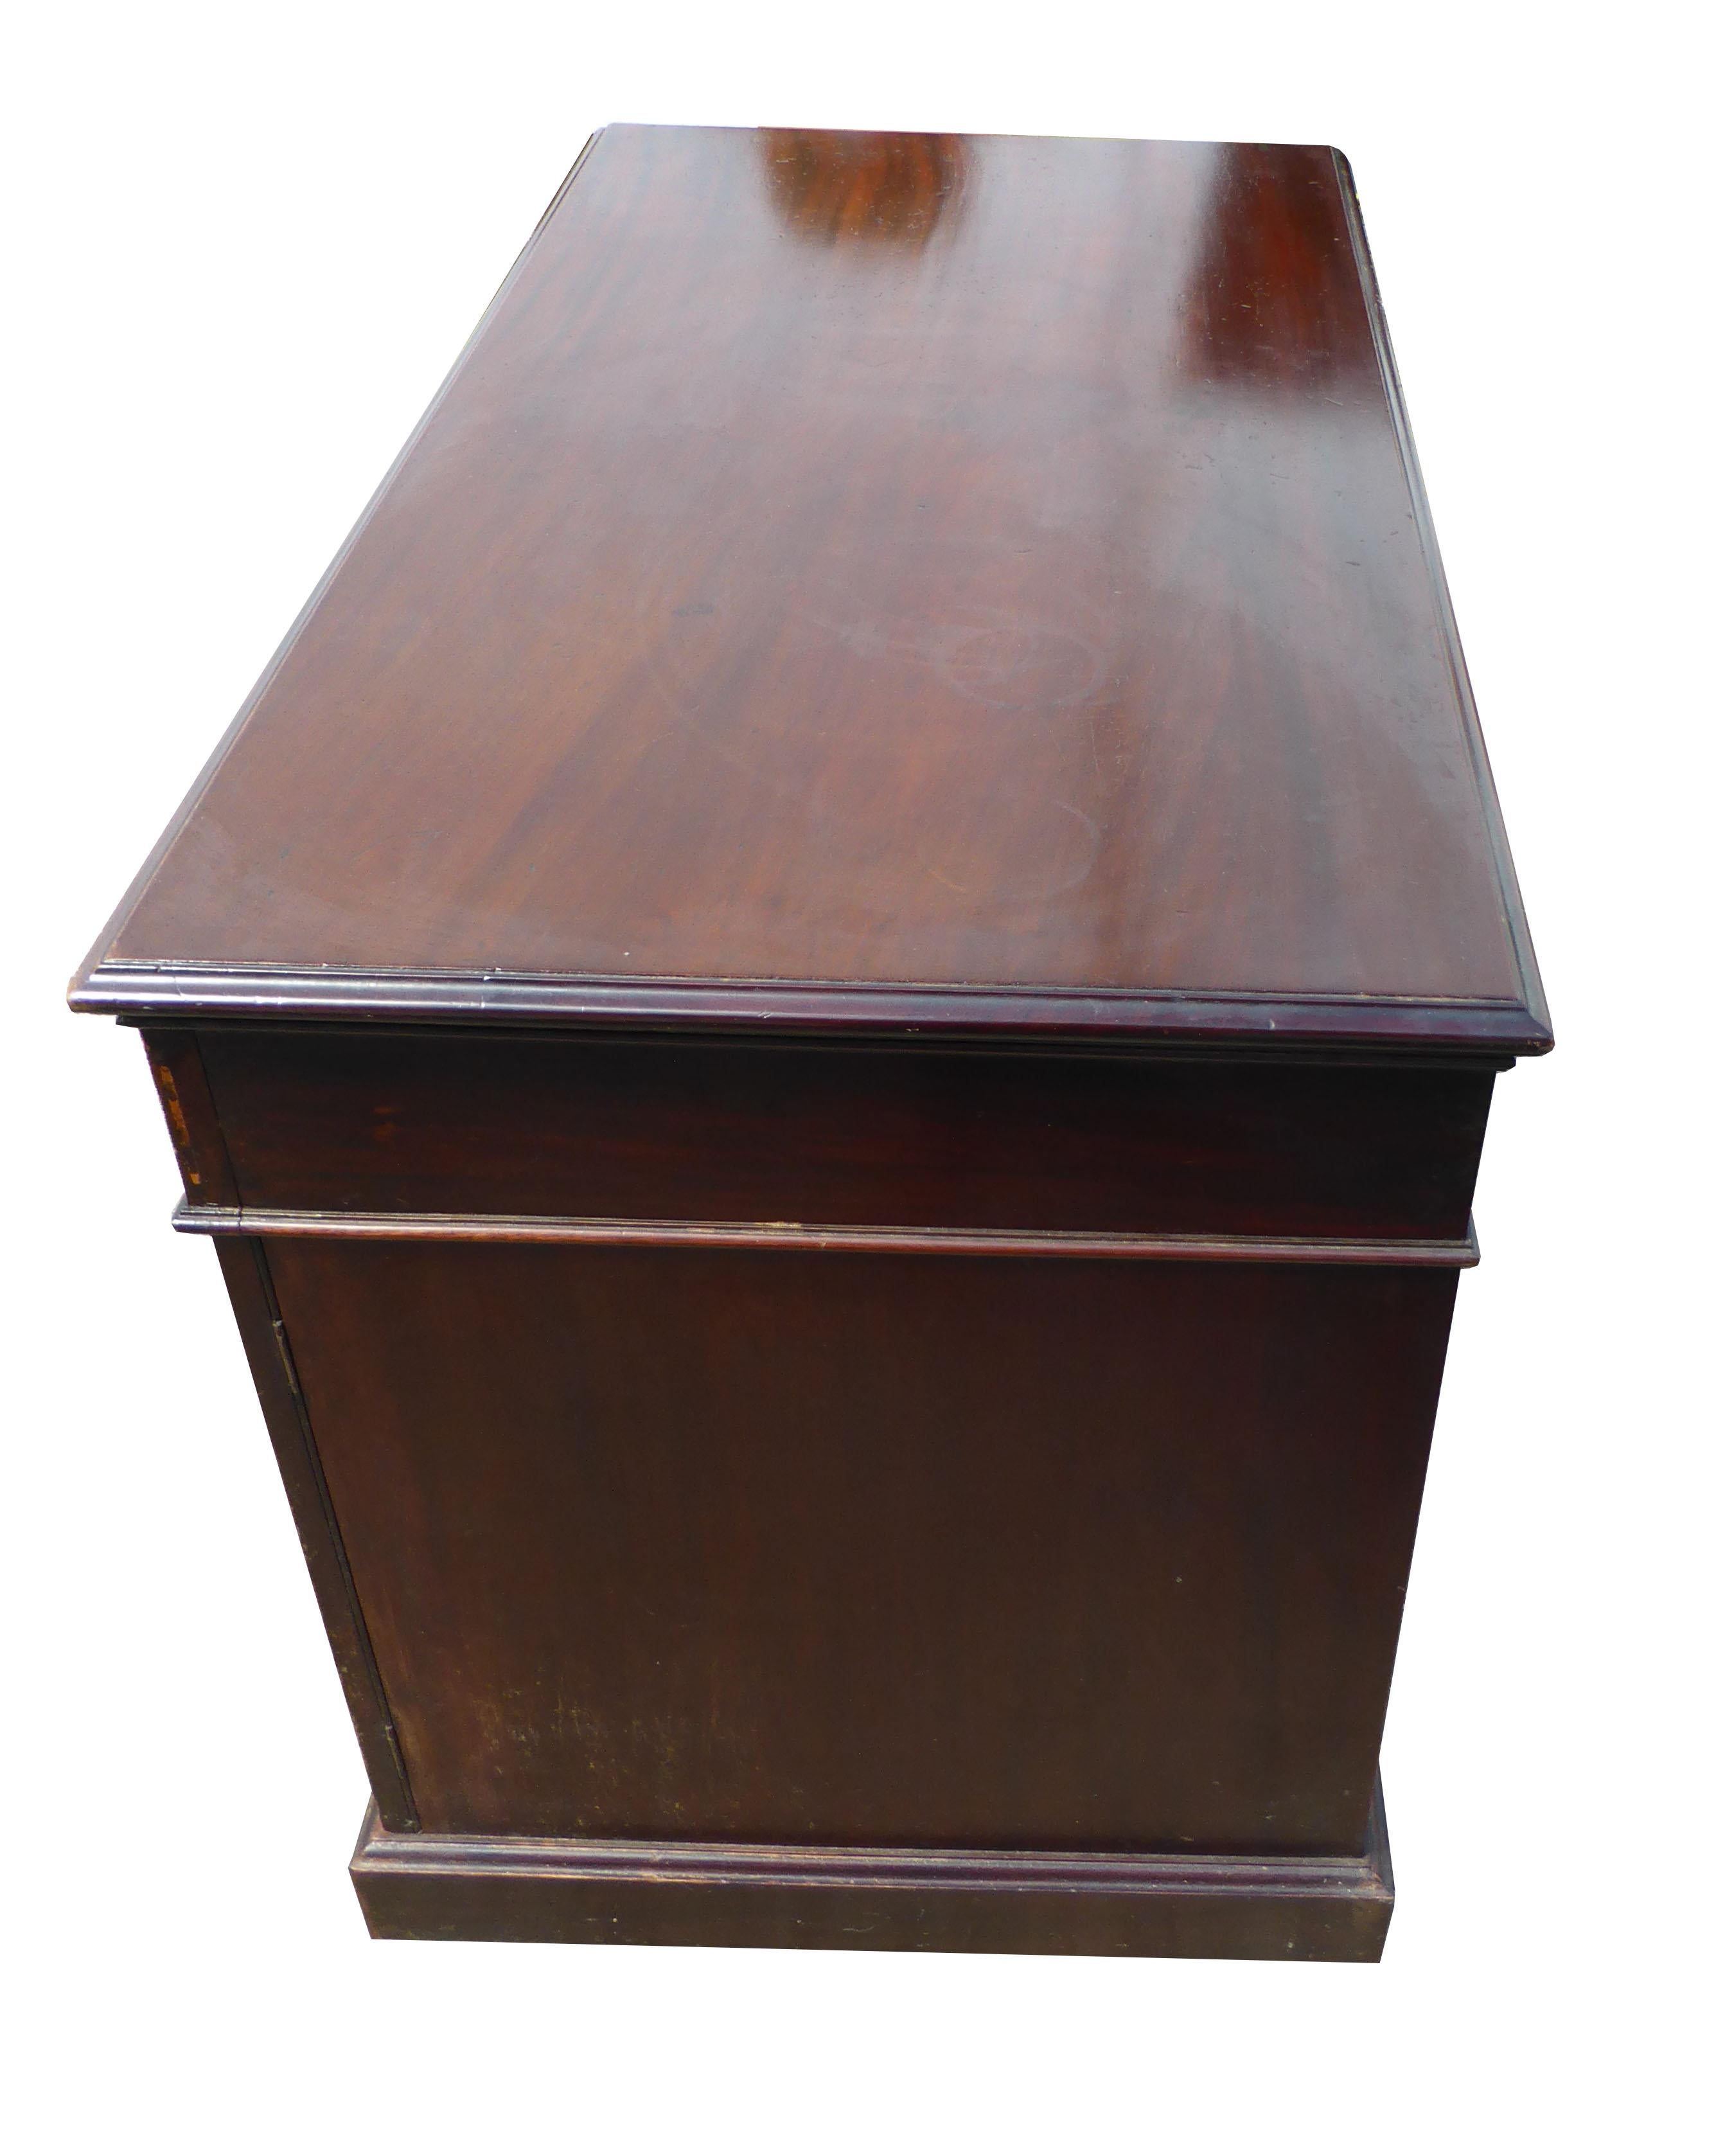 mahogany desk for sale